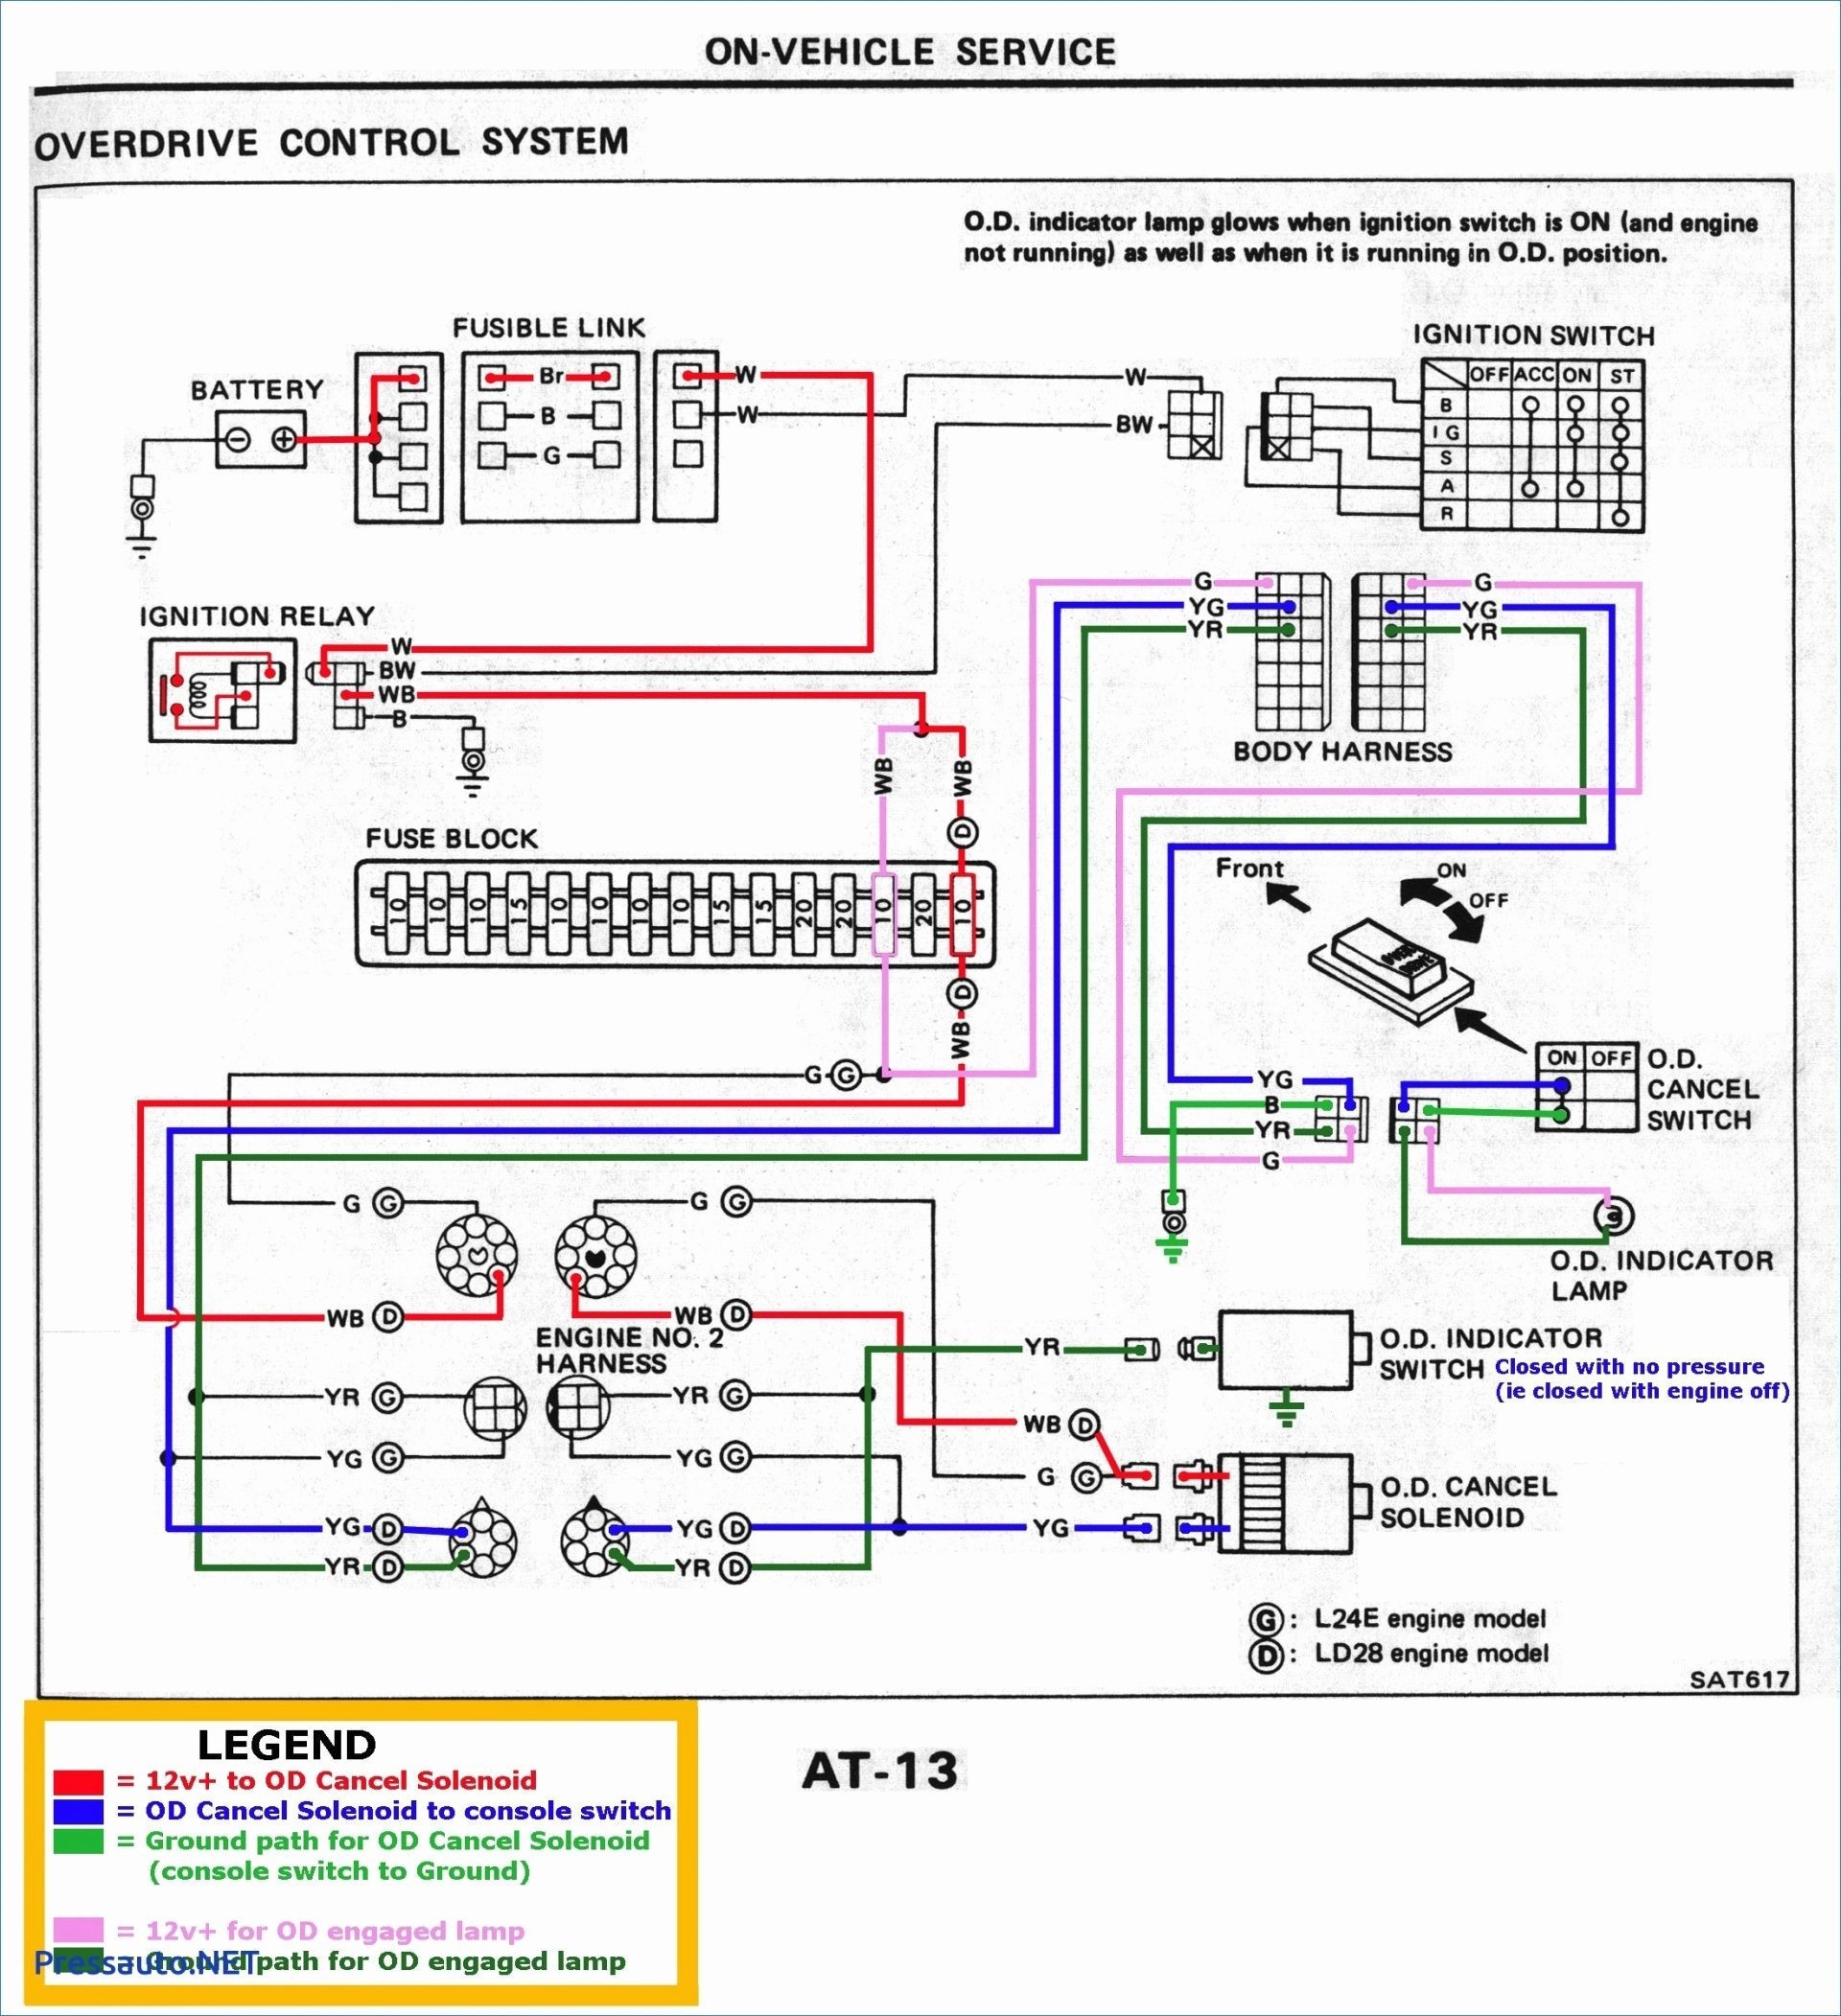 Alternator Wiring Diagram Chevy New Wiring Diagram For Holden Alternator 2019 Simple Wiring Diagram